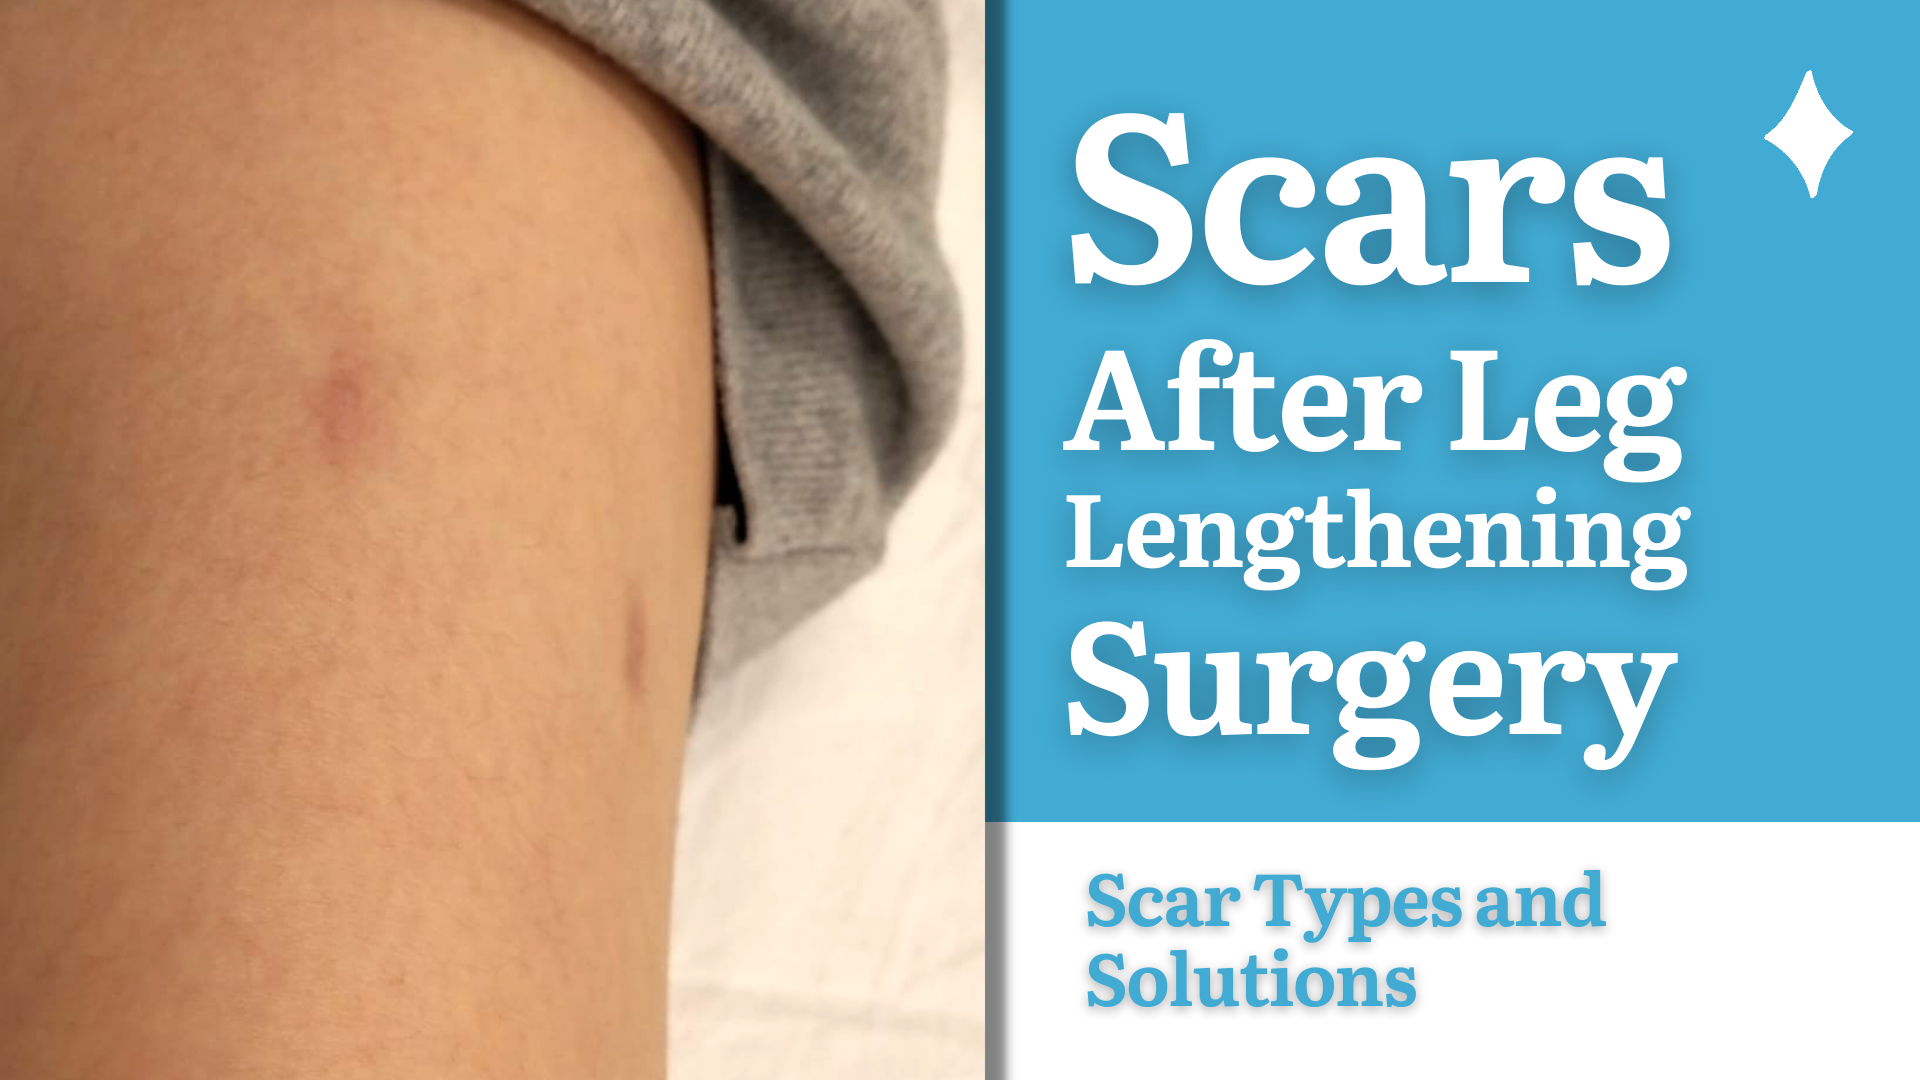 Scars After Leg Lengthening Surgery